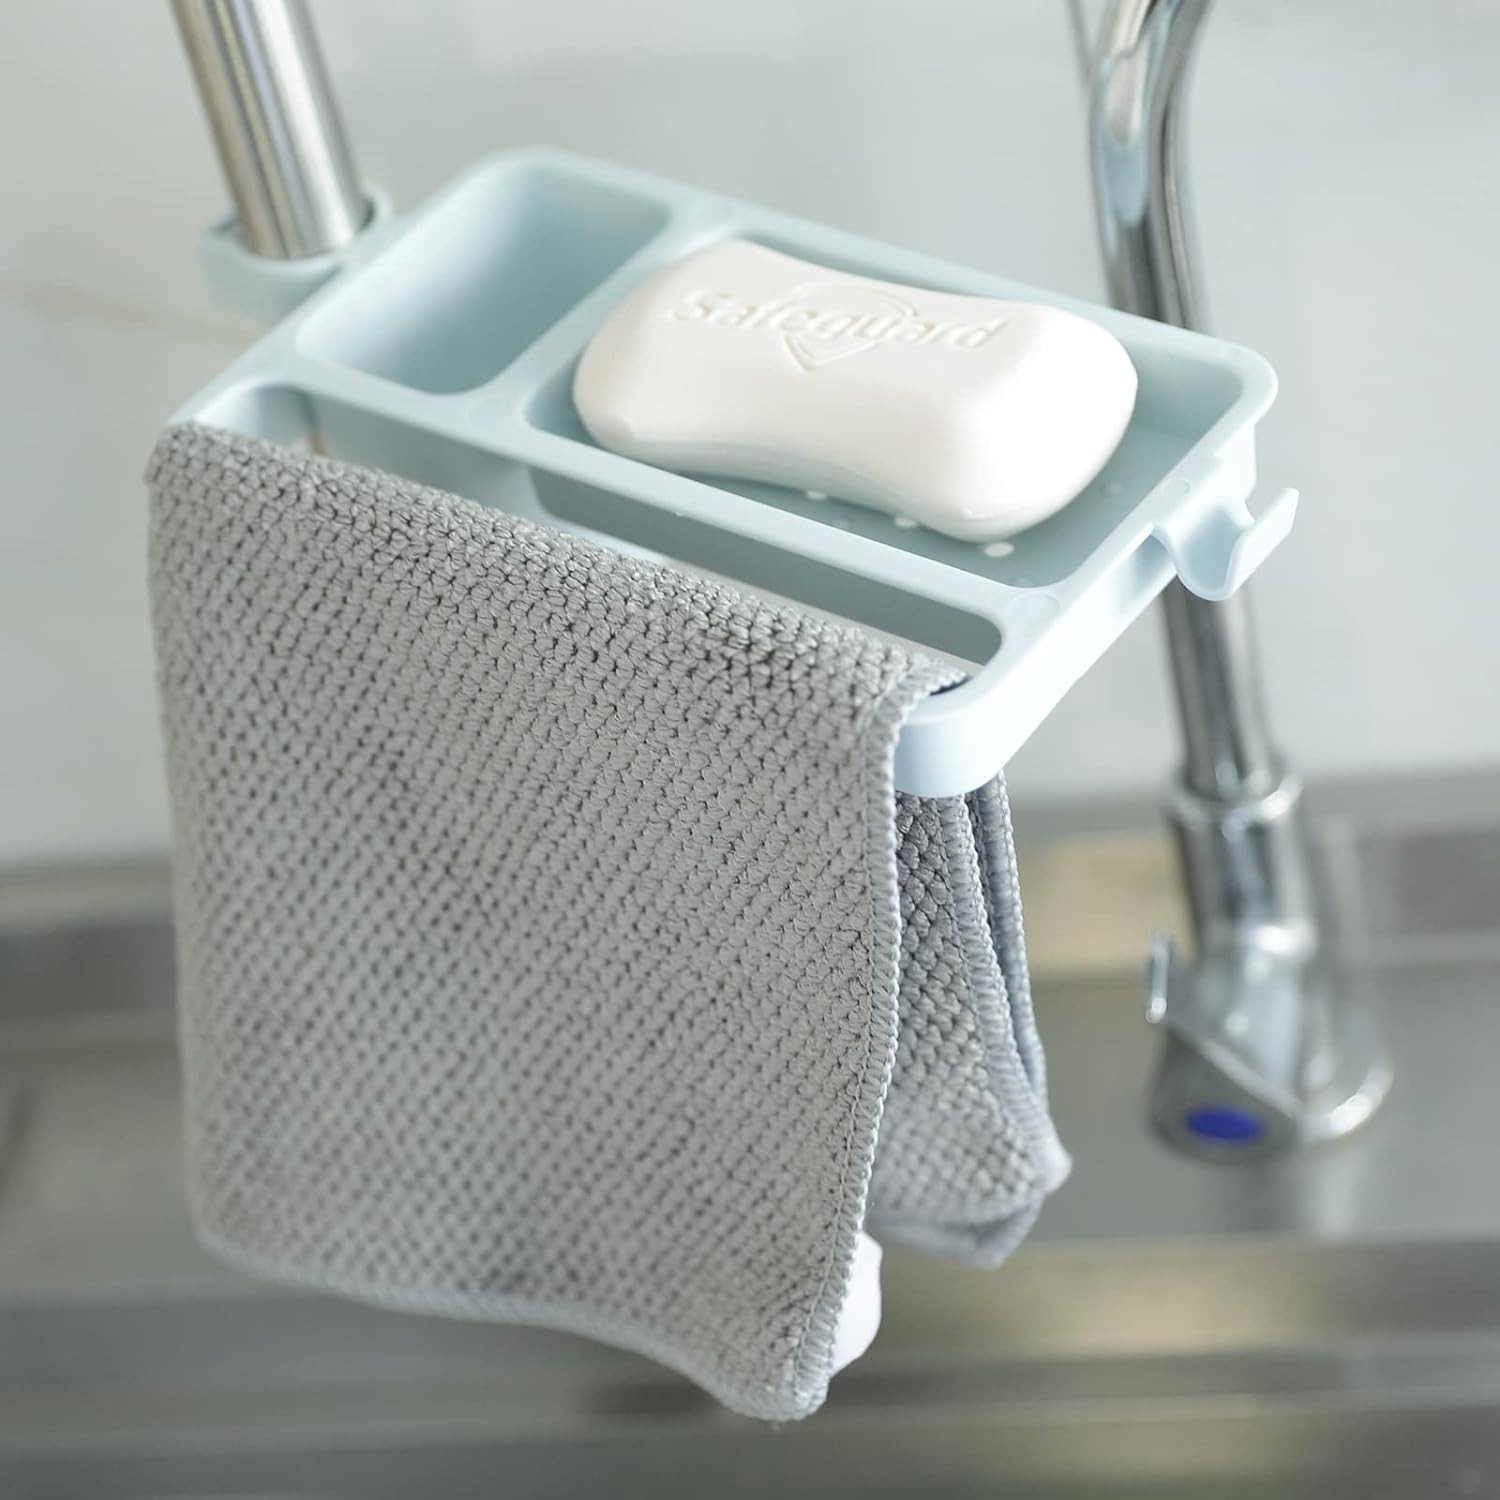 Kuber Industries Kitchen Organizer With Soap Holder|Premium PP|Durable & Sturdy|DIY Self-Adhesive Design|Multipurpose Bathroom Shelf|Smart Drainage Holes|TM18005|Blue